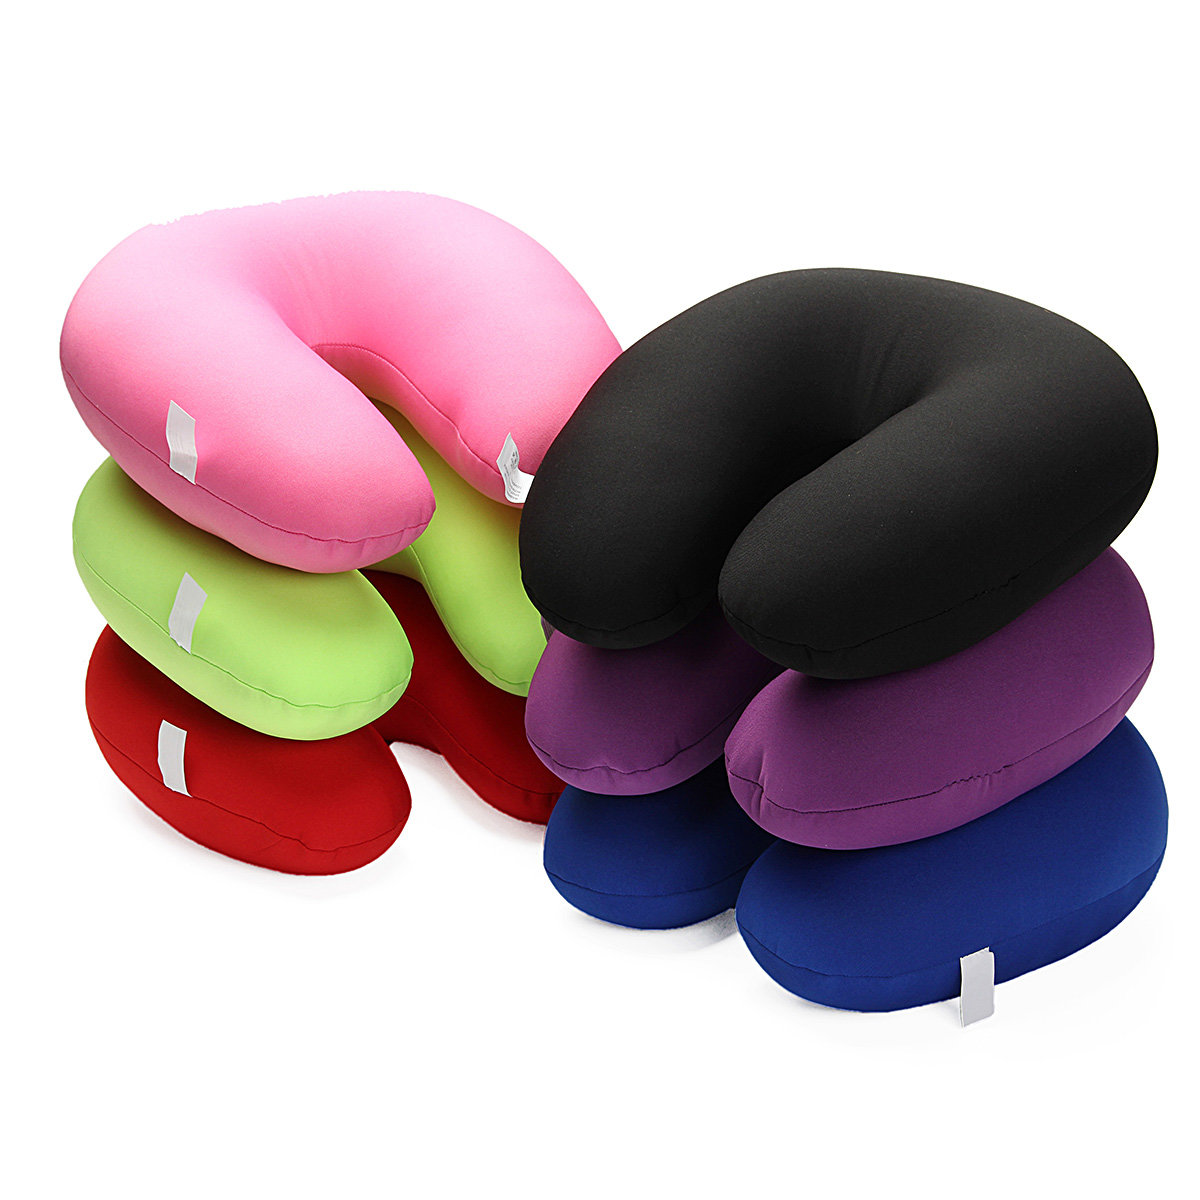 

30x30cm U Shape Foam Microbead Neck Pillow Travel Office Rest Use Bedding Pillow, Red;pink;black;blue;purple